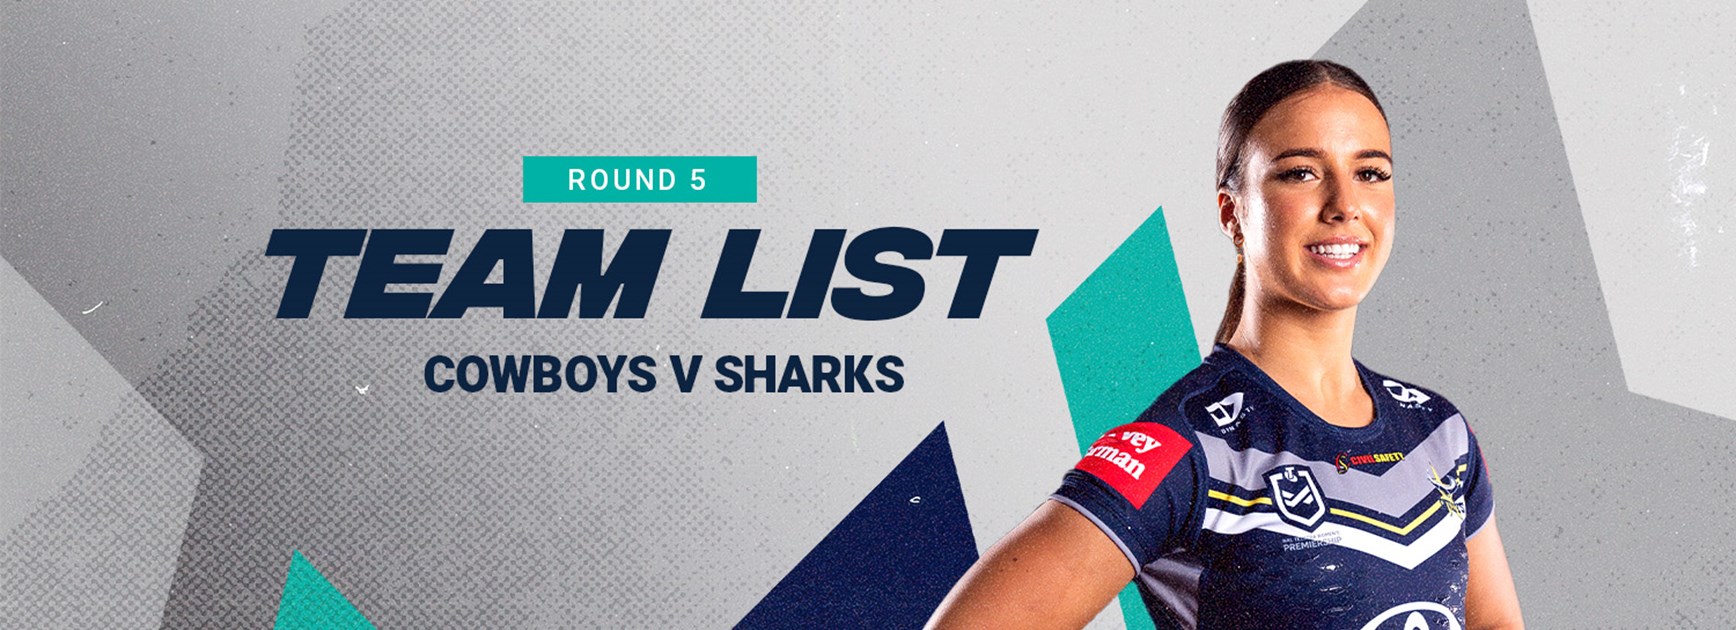 Cowboys NRLW team list: Round 5 v Sharks